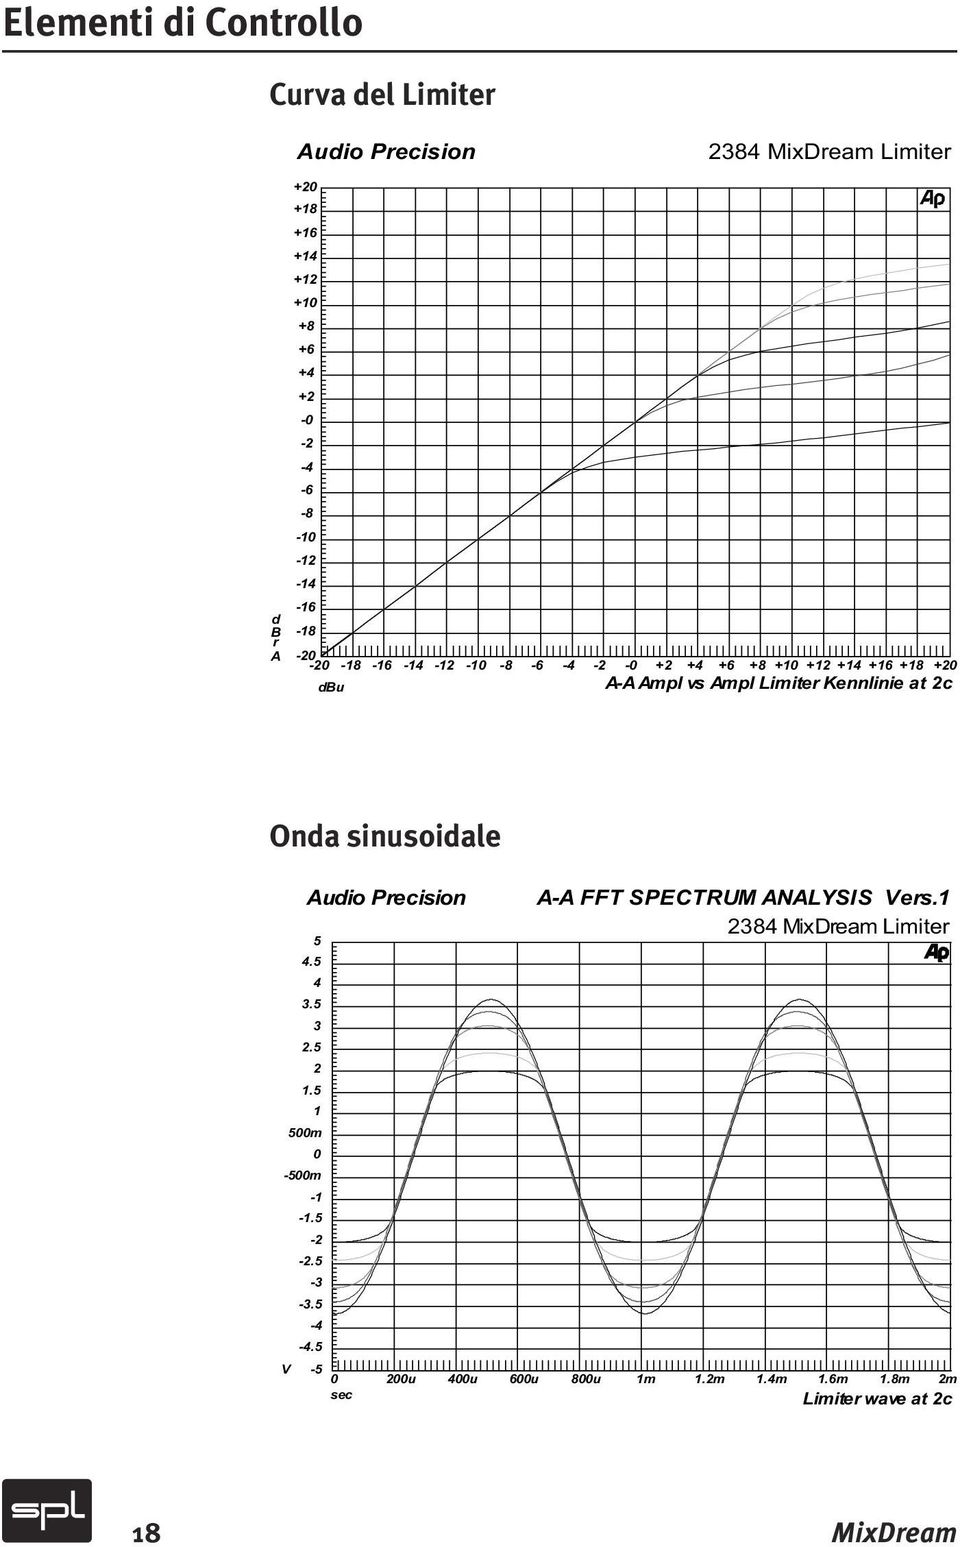 Limiter Kennlinie at 2c da sinusoidale Audio Precision A-A FFT SPECTRUM ANALYSIS Vers.1 2384 Dream Limiter 5-500m V 4.5 4 3.